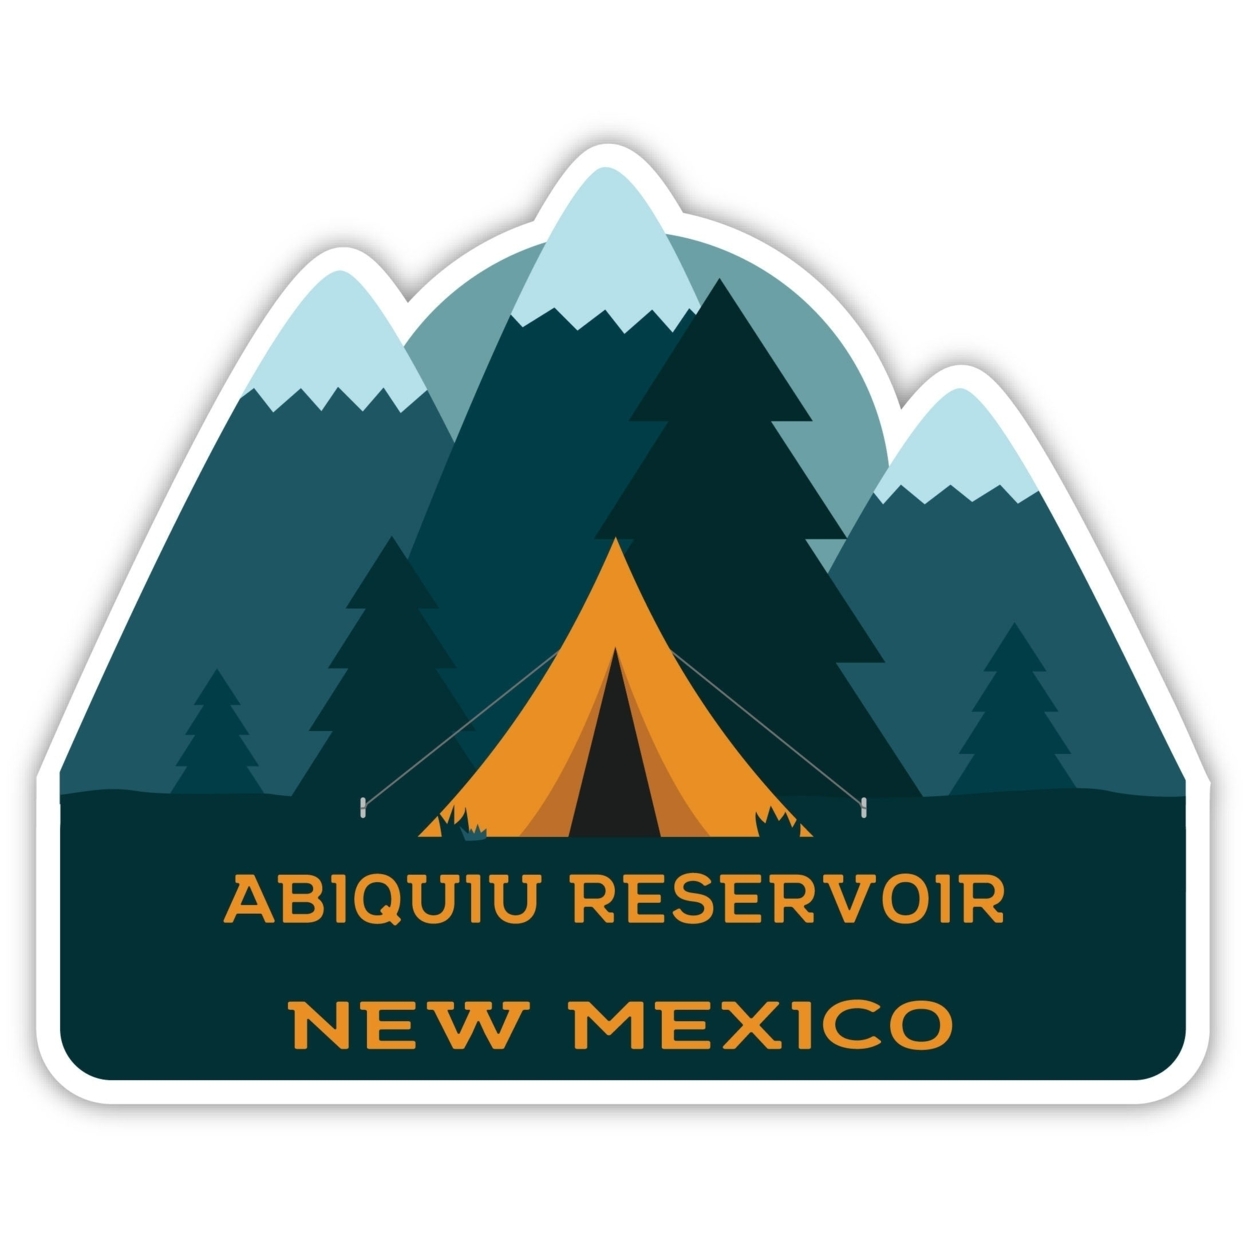 Abiquiu Reservoir New Mexico Souvenir Decorative Stickers (Choose Theme And Size) - 4-Pack, 8-Inch, Tent